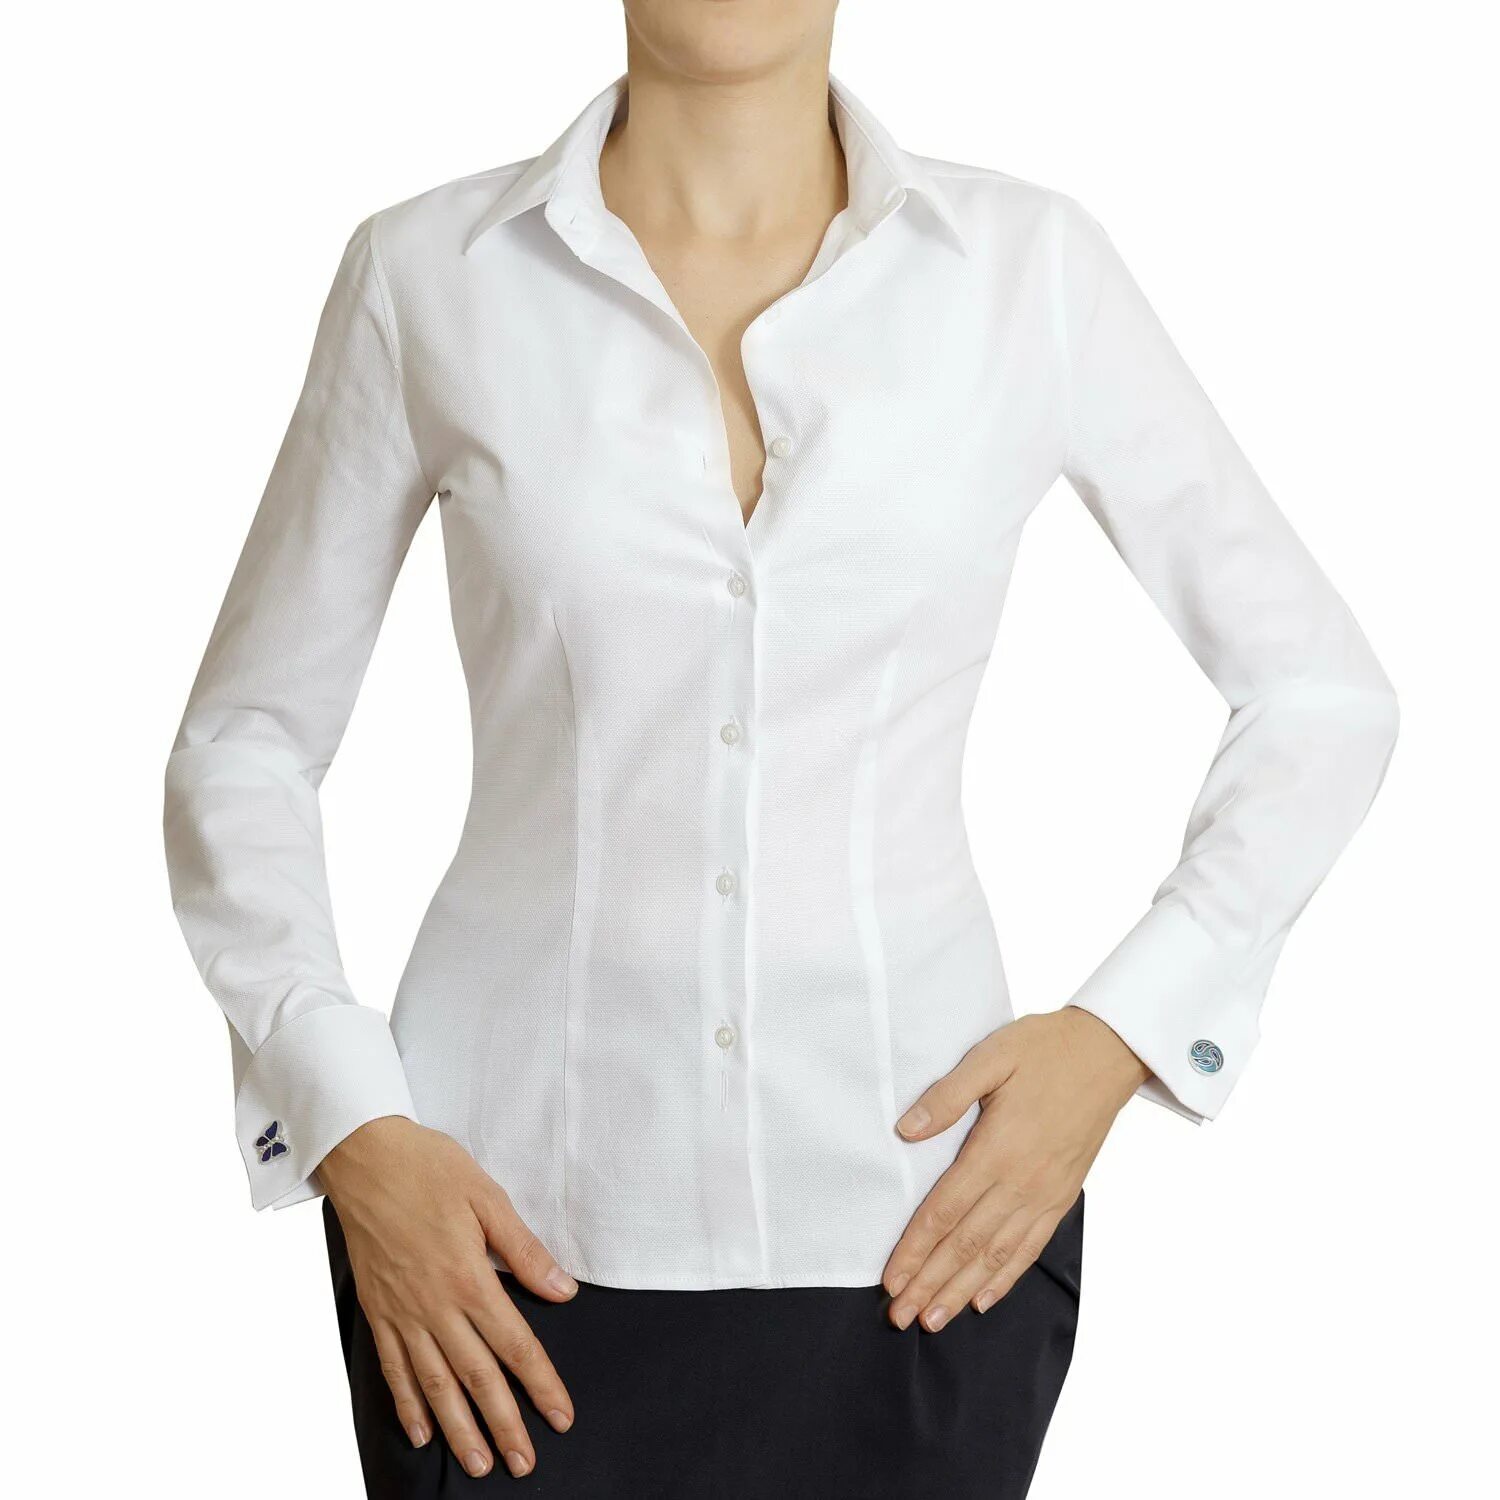 Рубашка цум. ЦУМ белая рубашка женская. Приталенная рубашка женская. Приталенная белая рубашка женская. Женская рубашка приталенная с запонками.